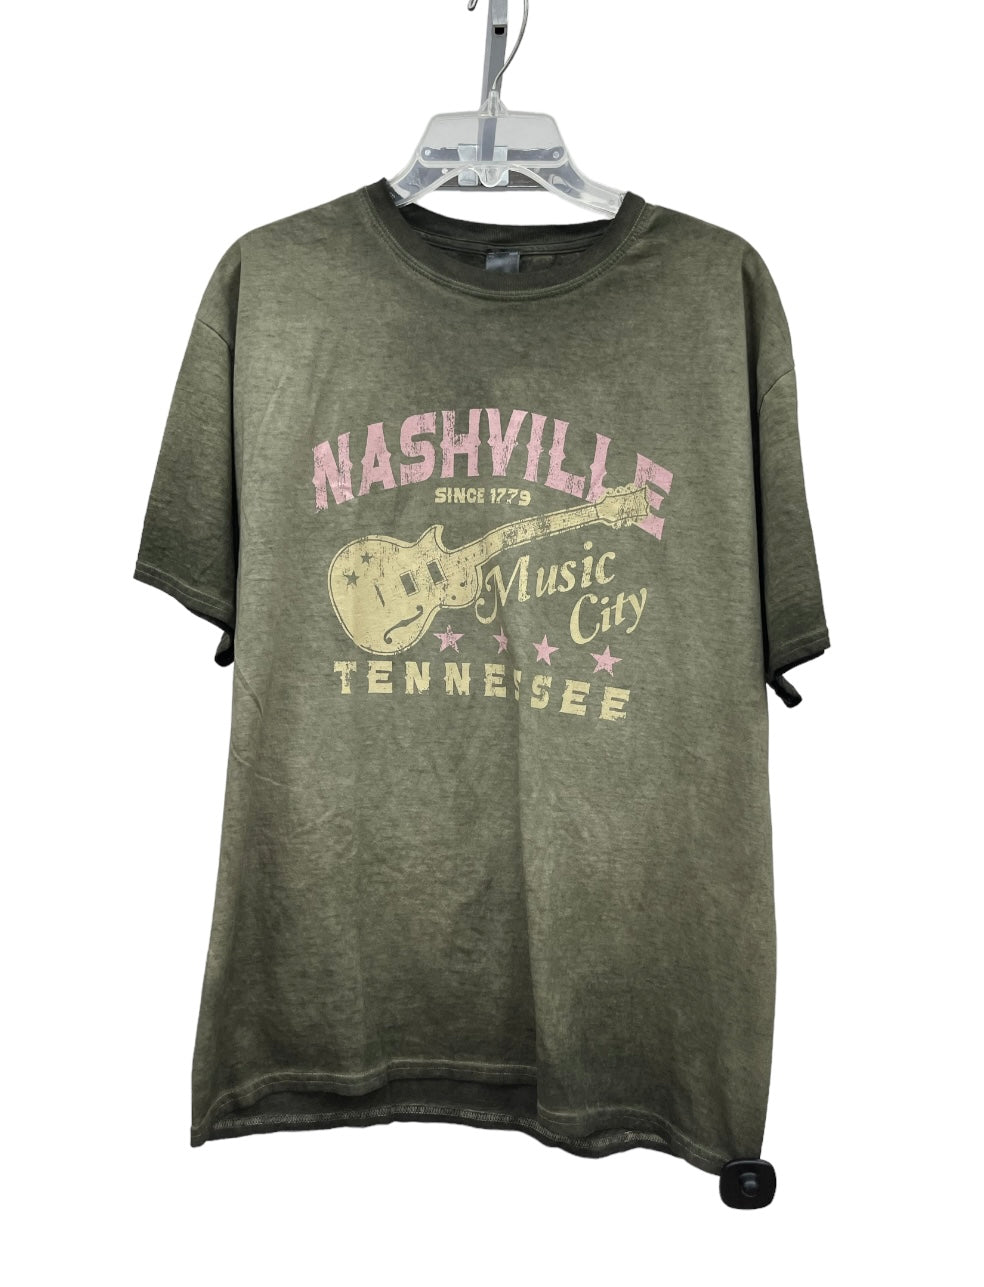 Nashville live shirt